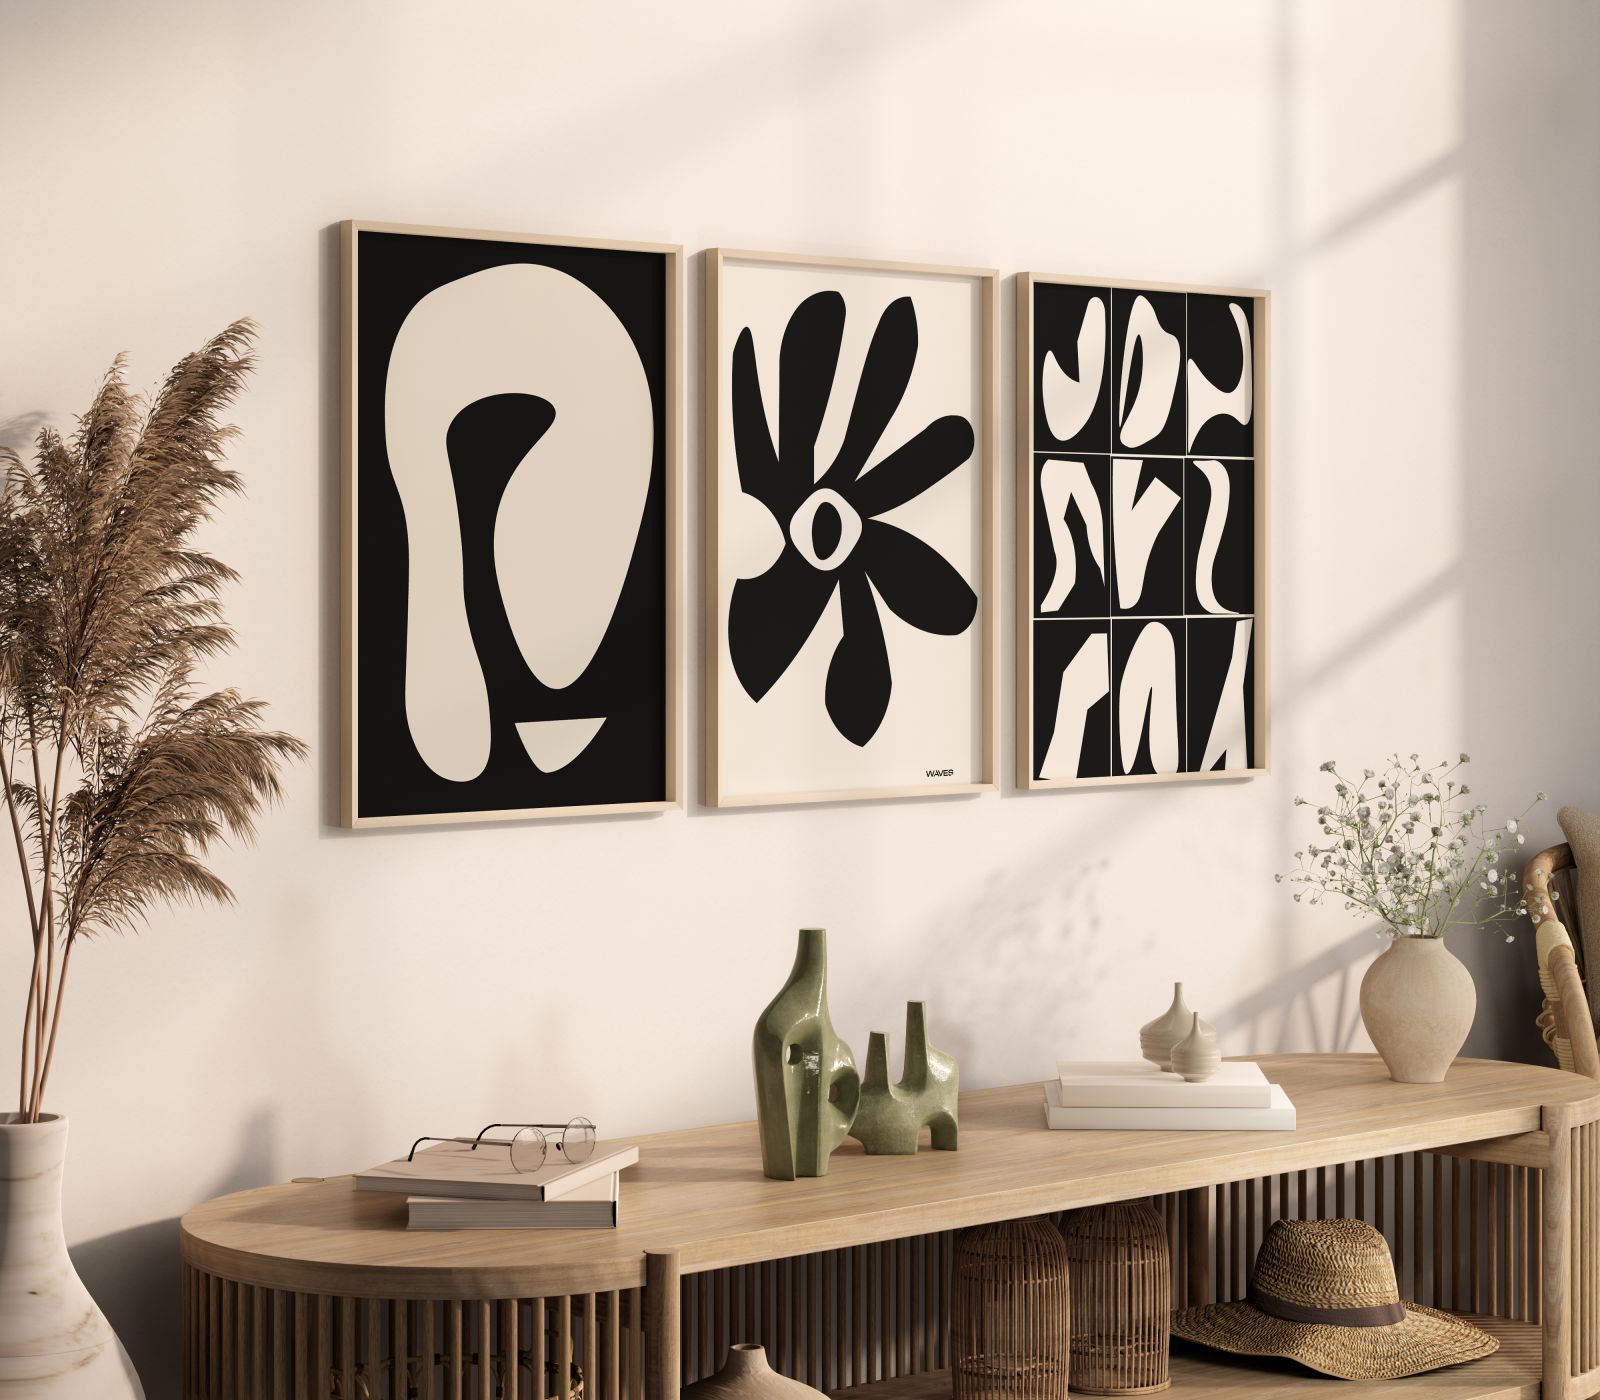 Plakaty w stylu Matisse